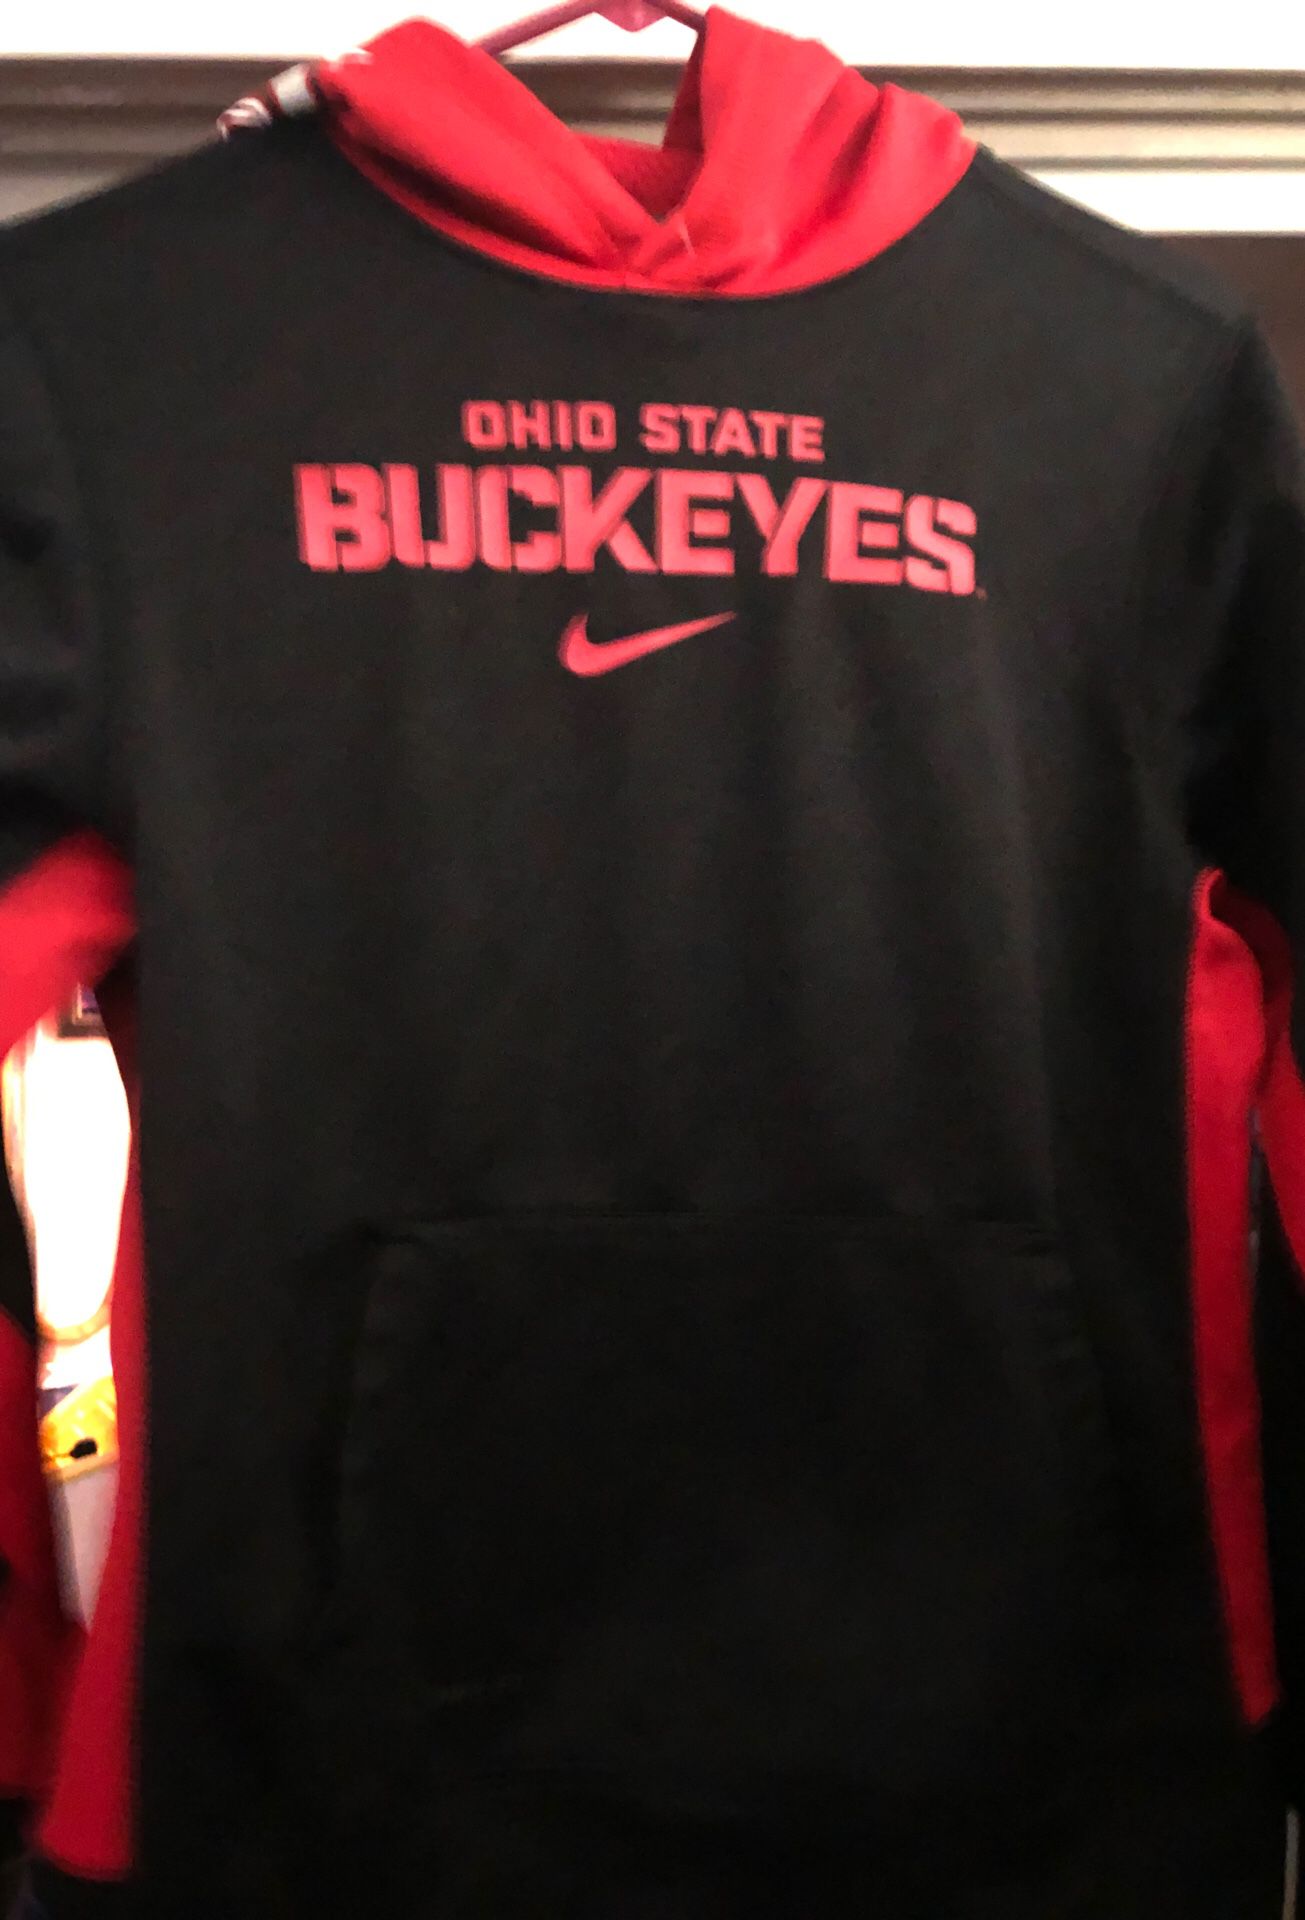 The Ohio state buckeyes hoodie